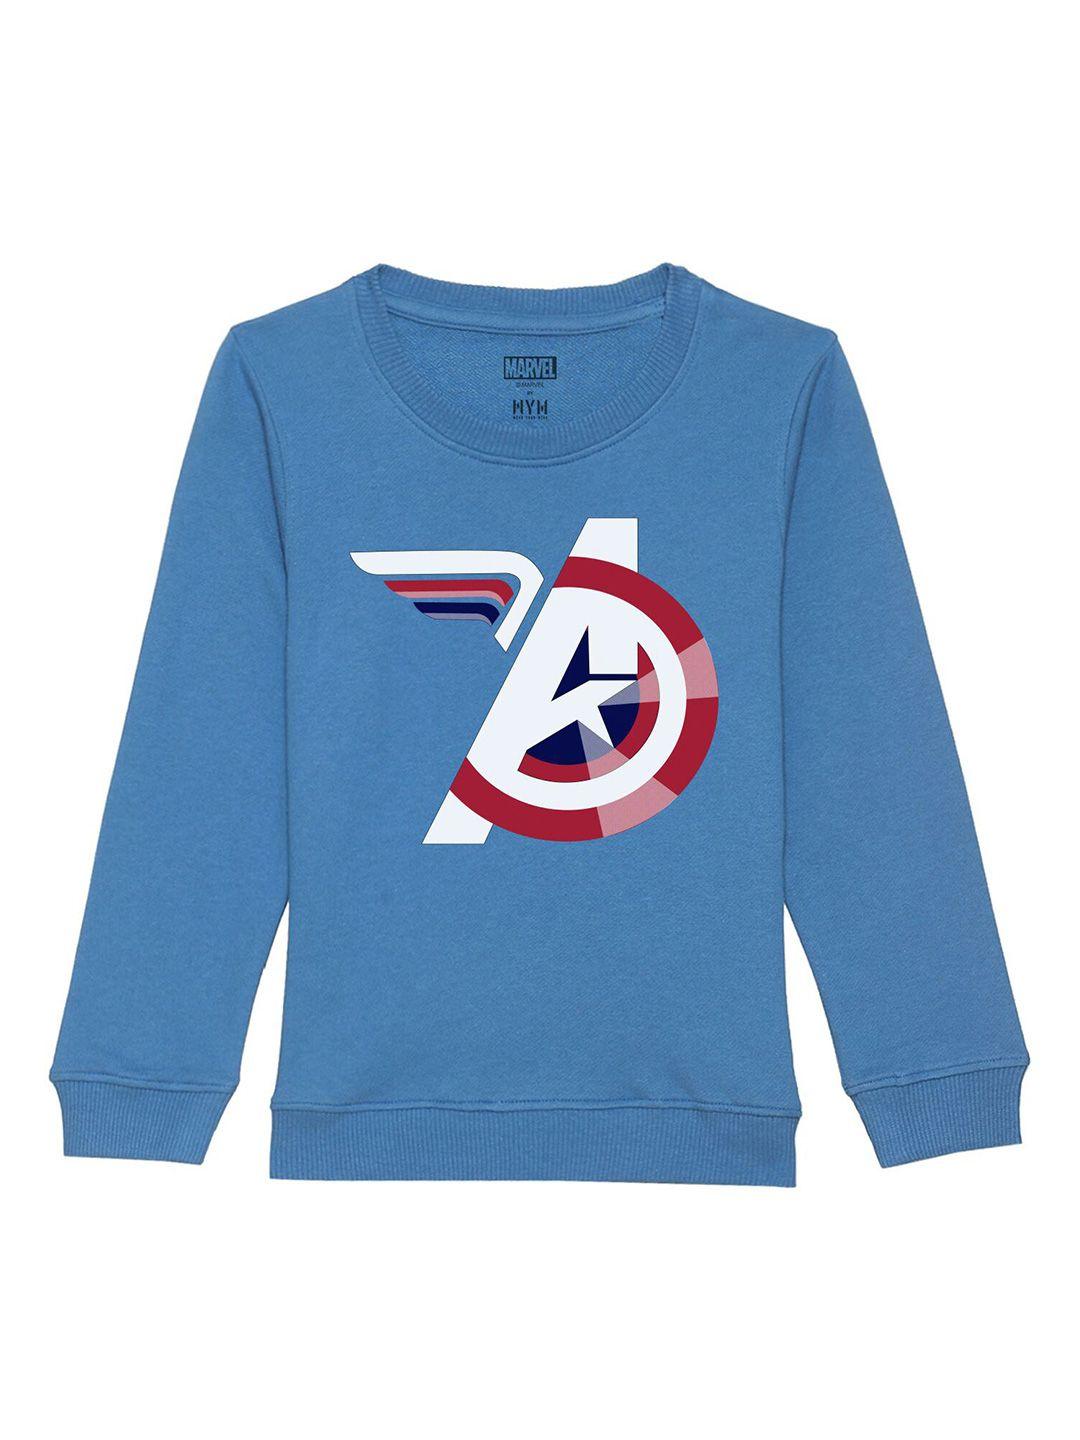 marvel by wear your mind kids blue printed sweatshirt